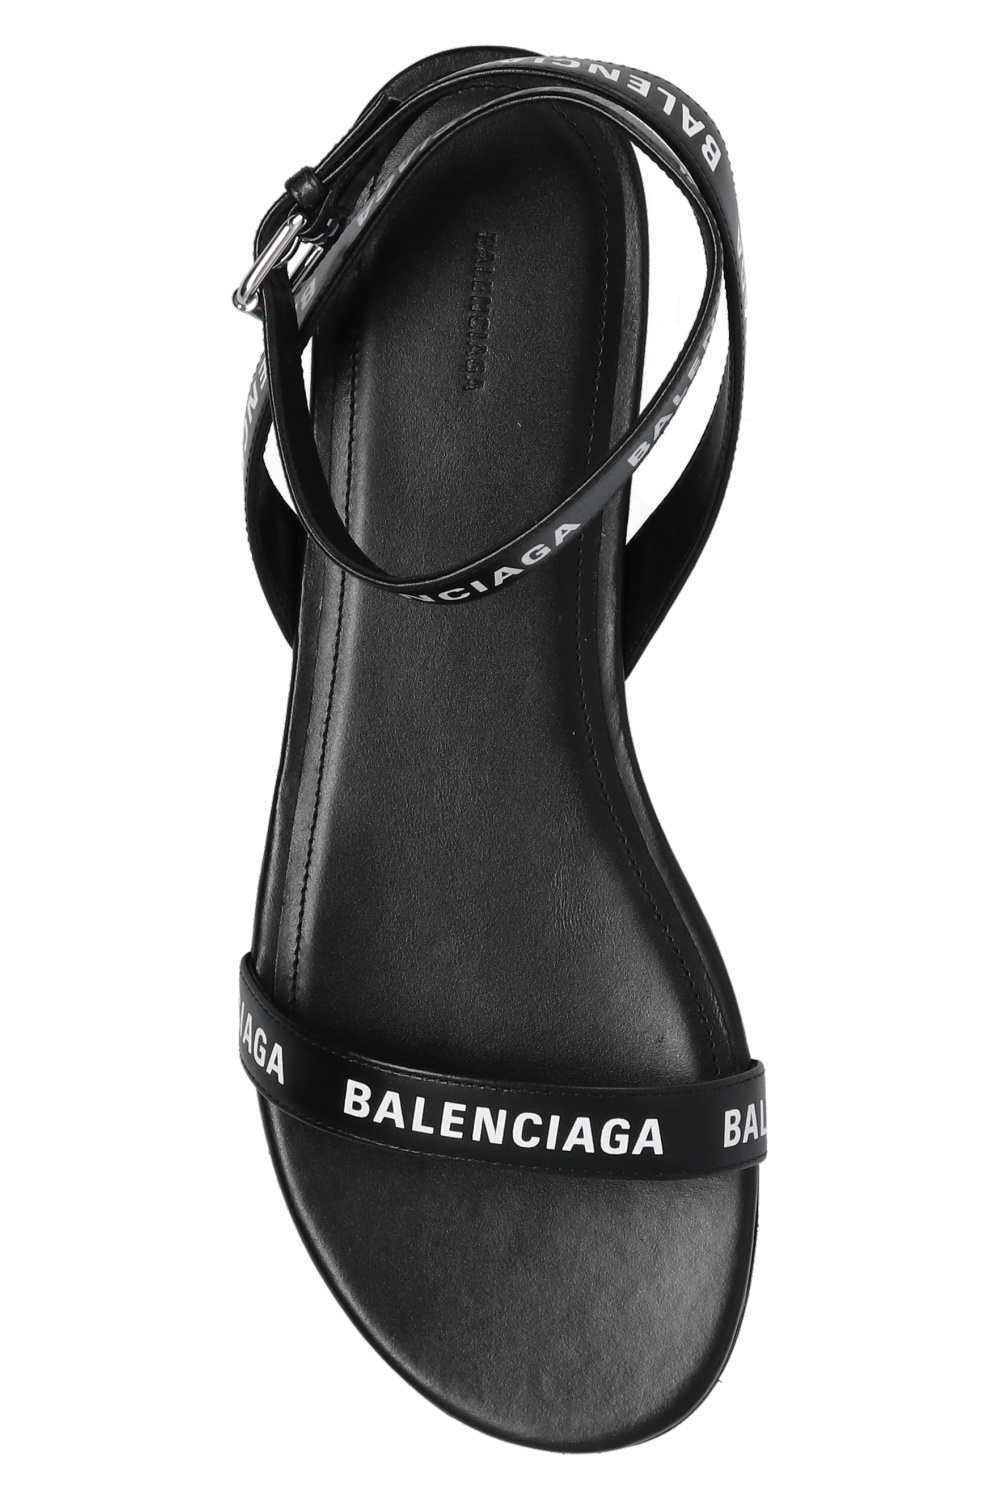 Balenciaga Derby Flat shoes